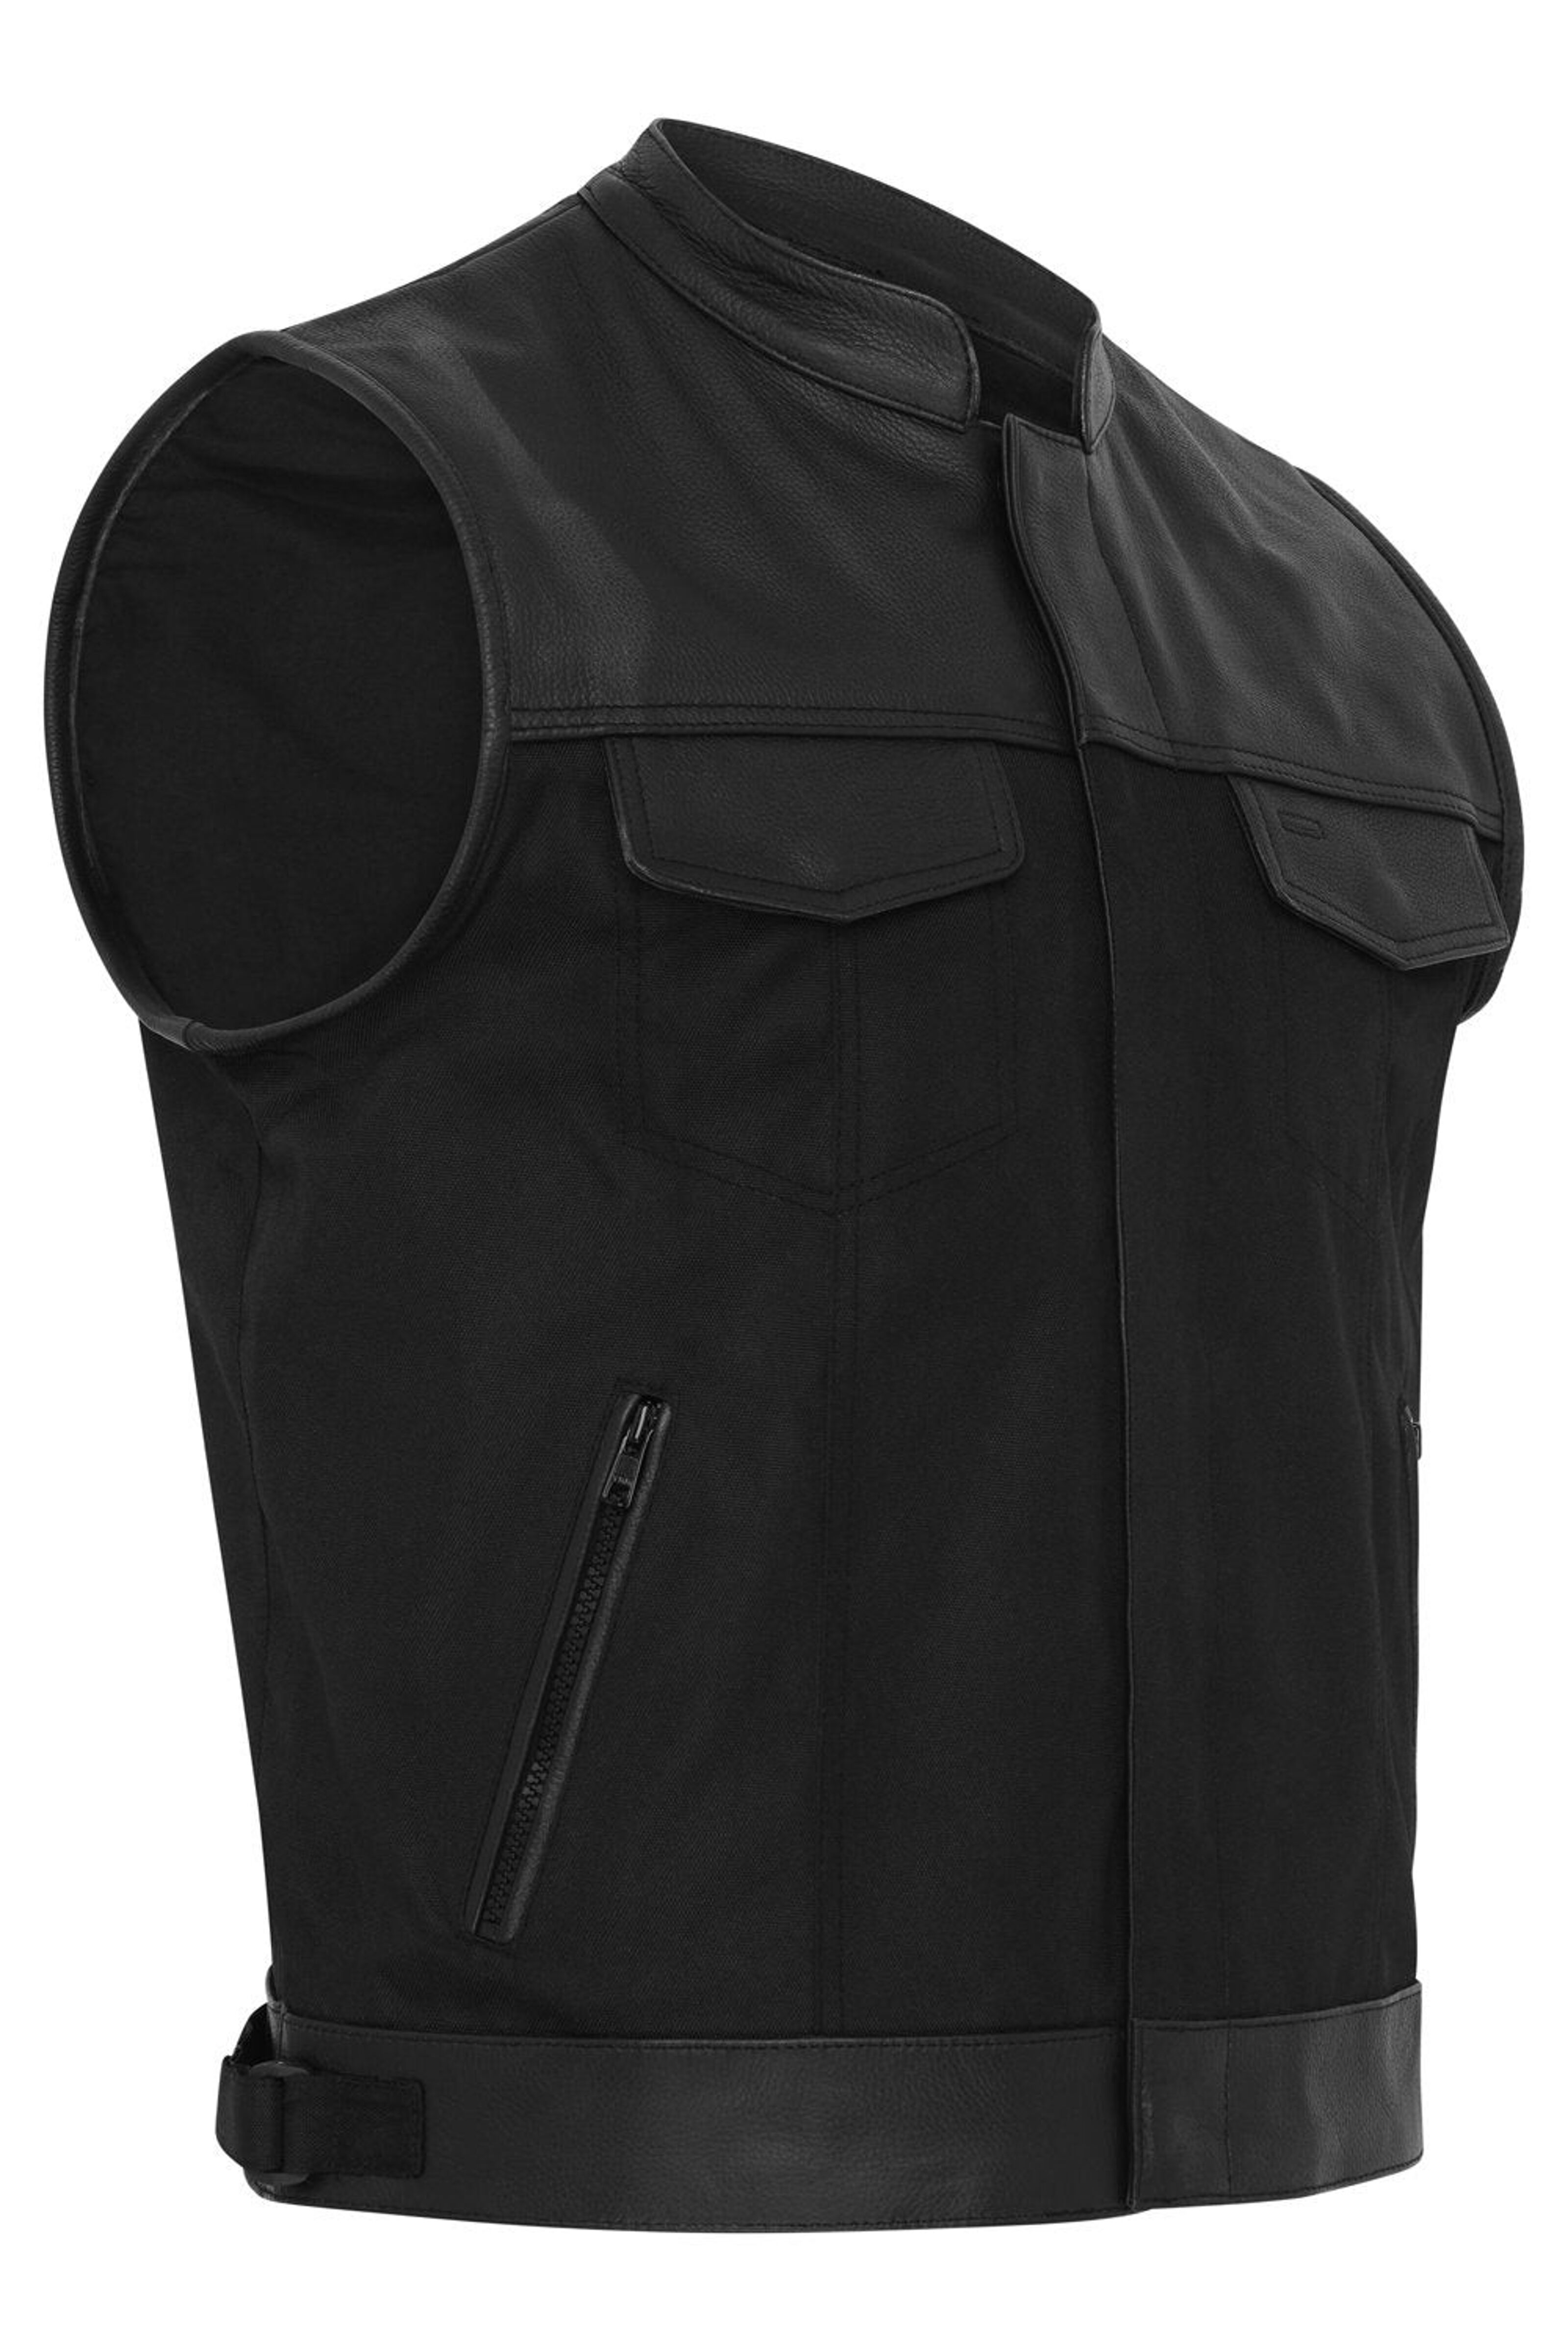 Men's Bulletproof Body Armour Fashion Biker vest - Mready